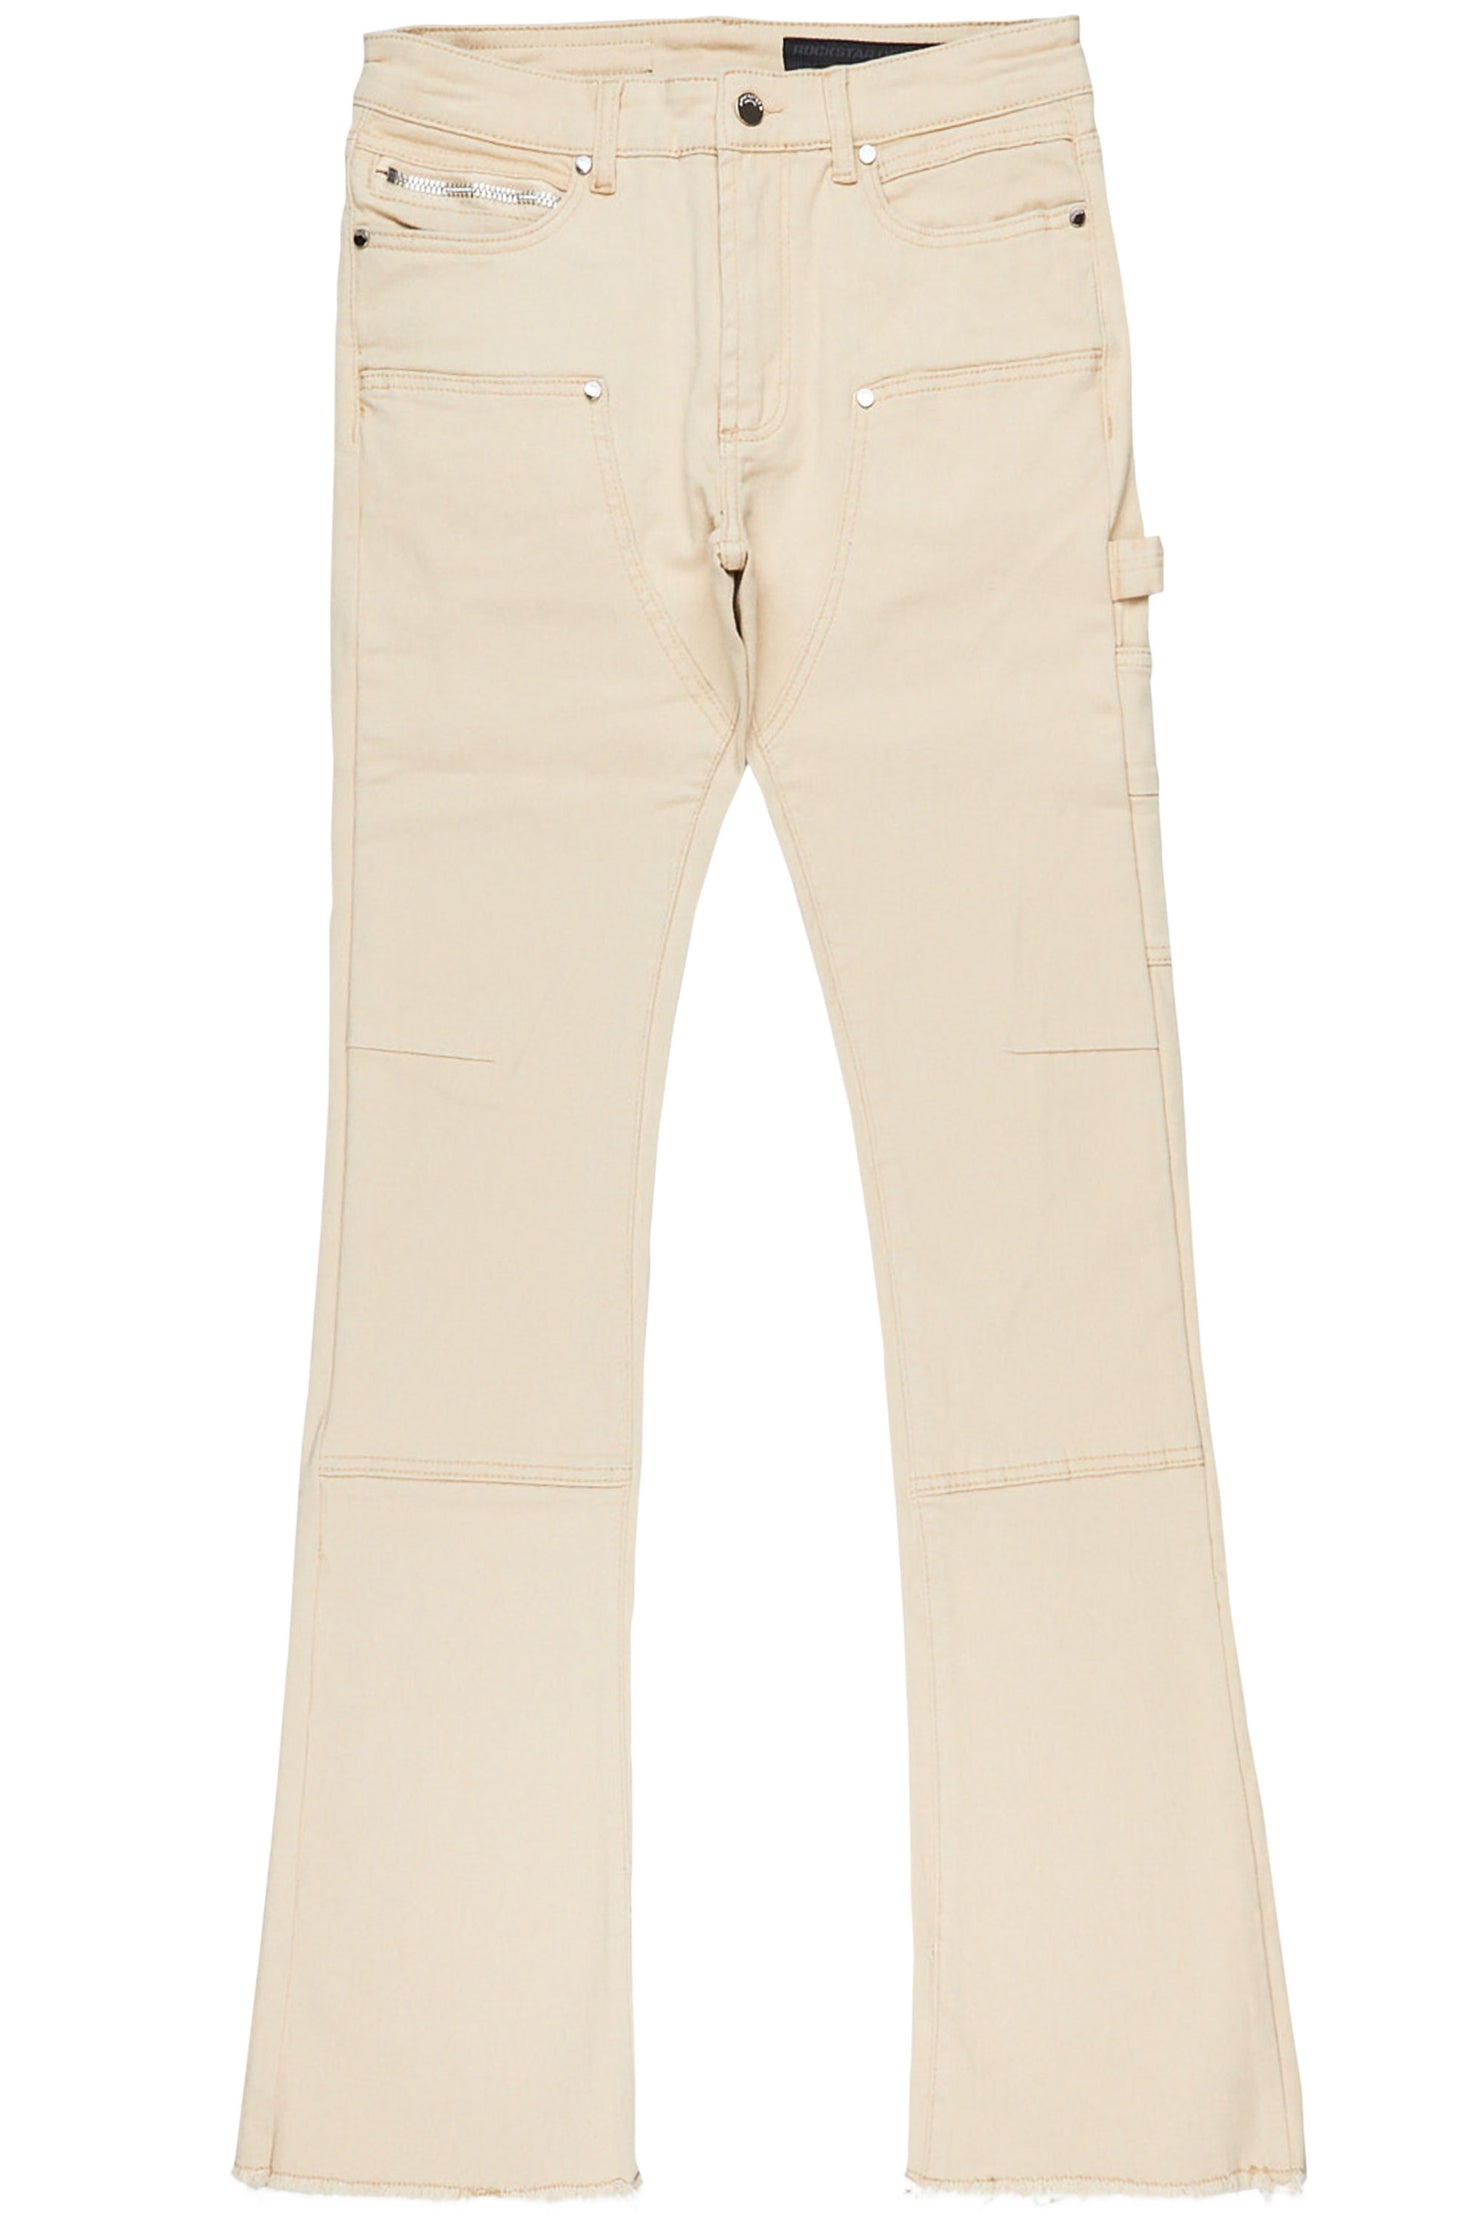 Quartz Beige Stacked Flare Jean